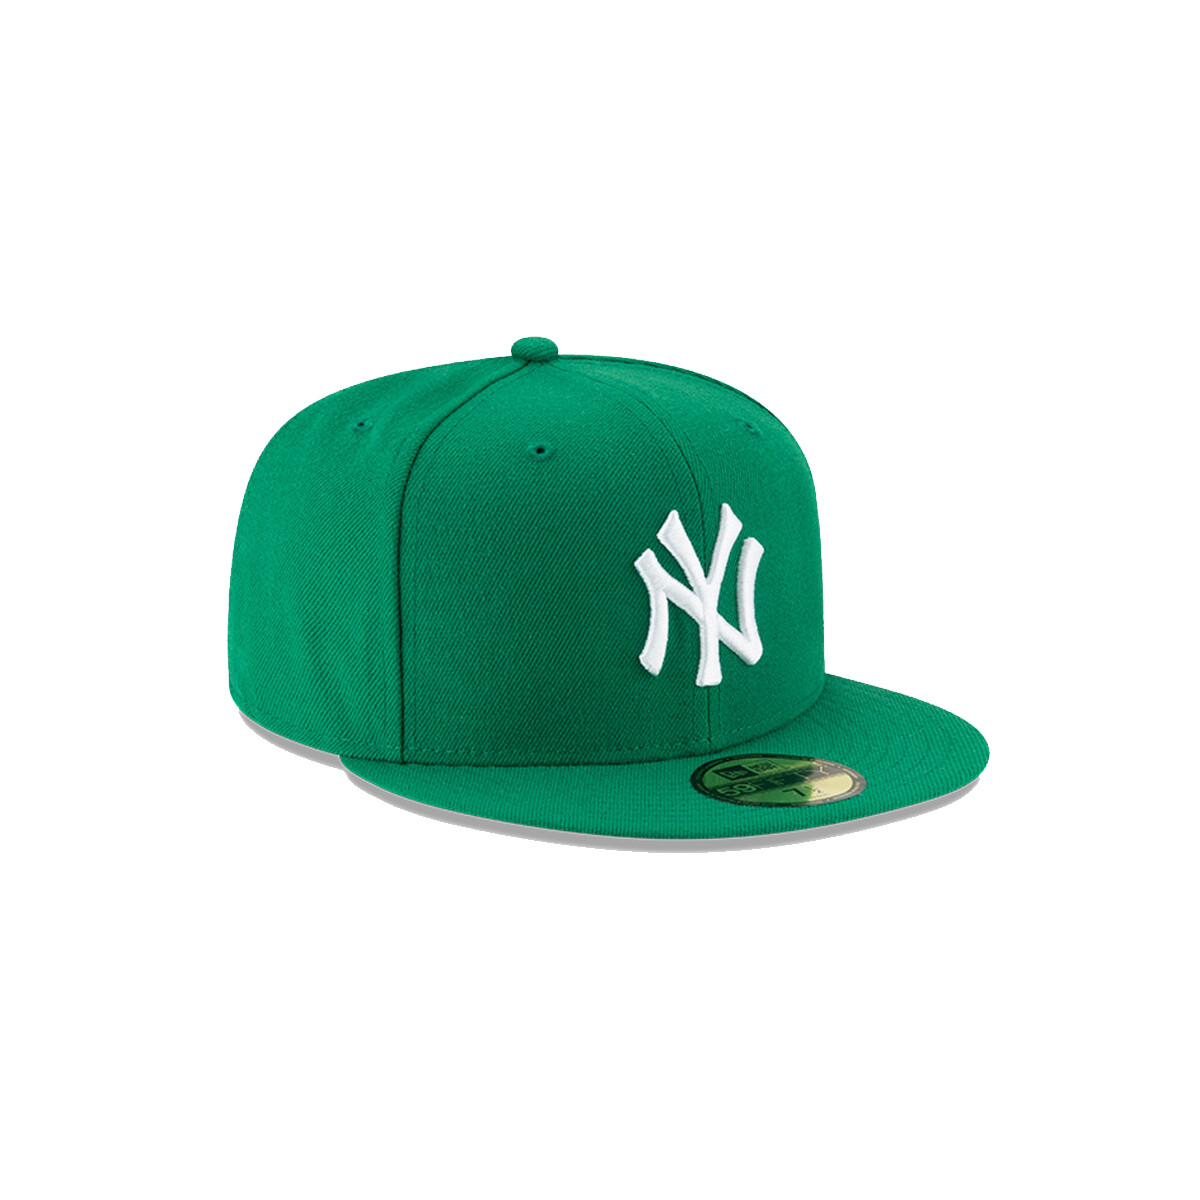 Gorro New Era - New York Yankees MLB 59FIFTY - 11591124 - GREEN 